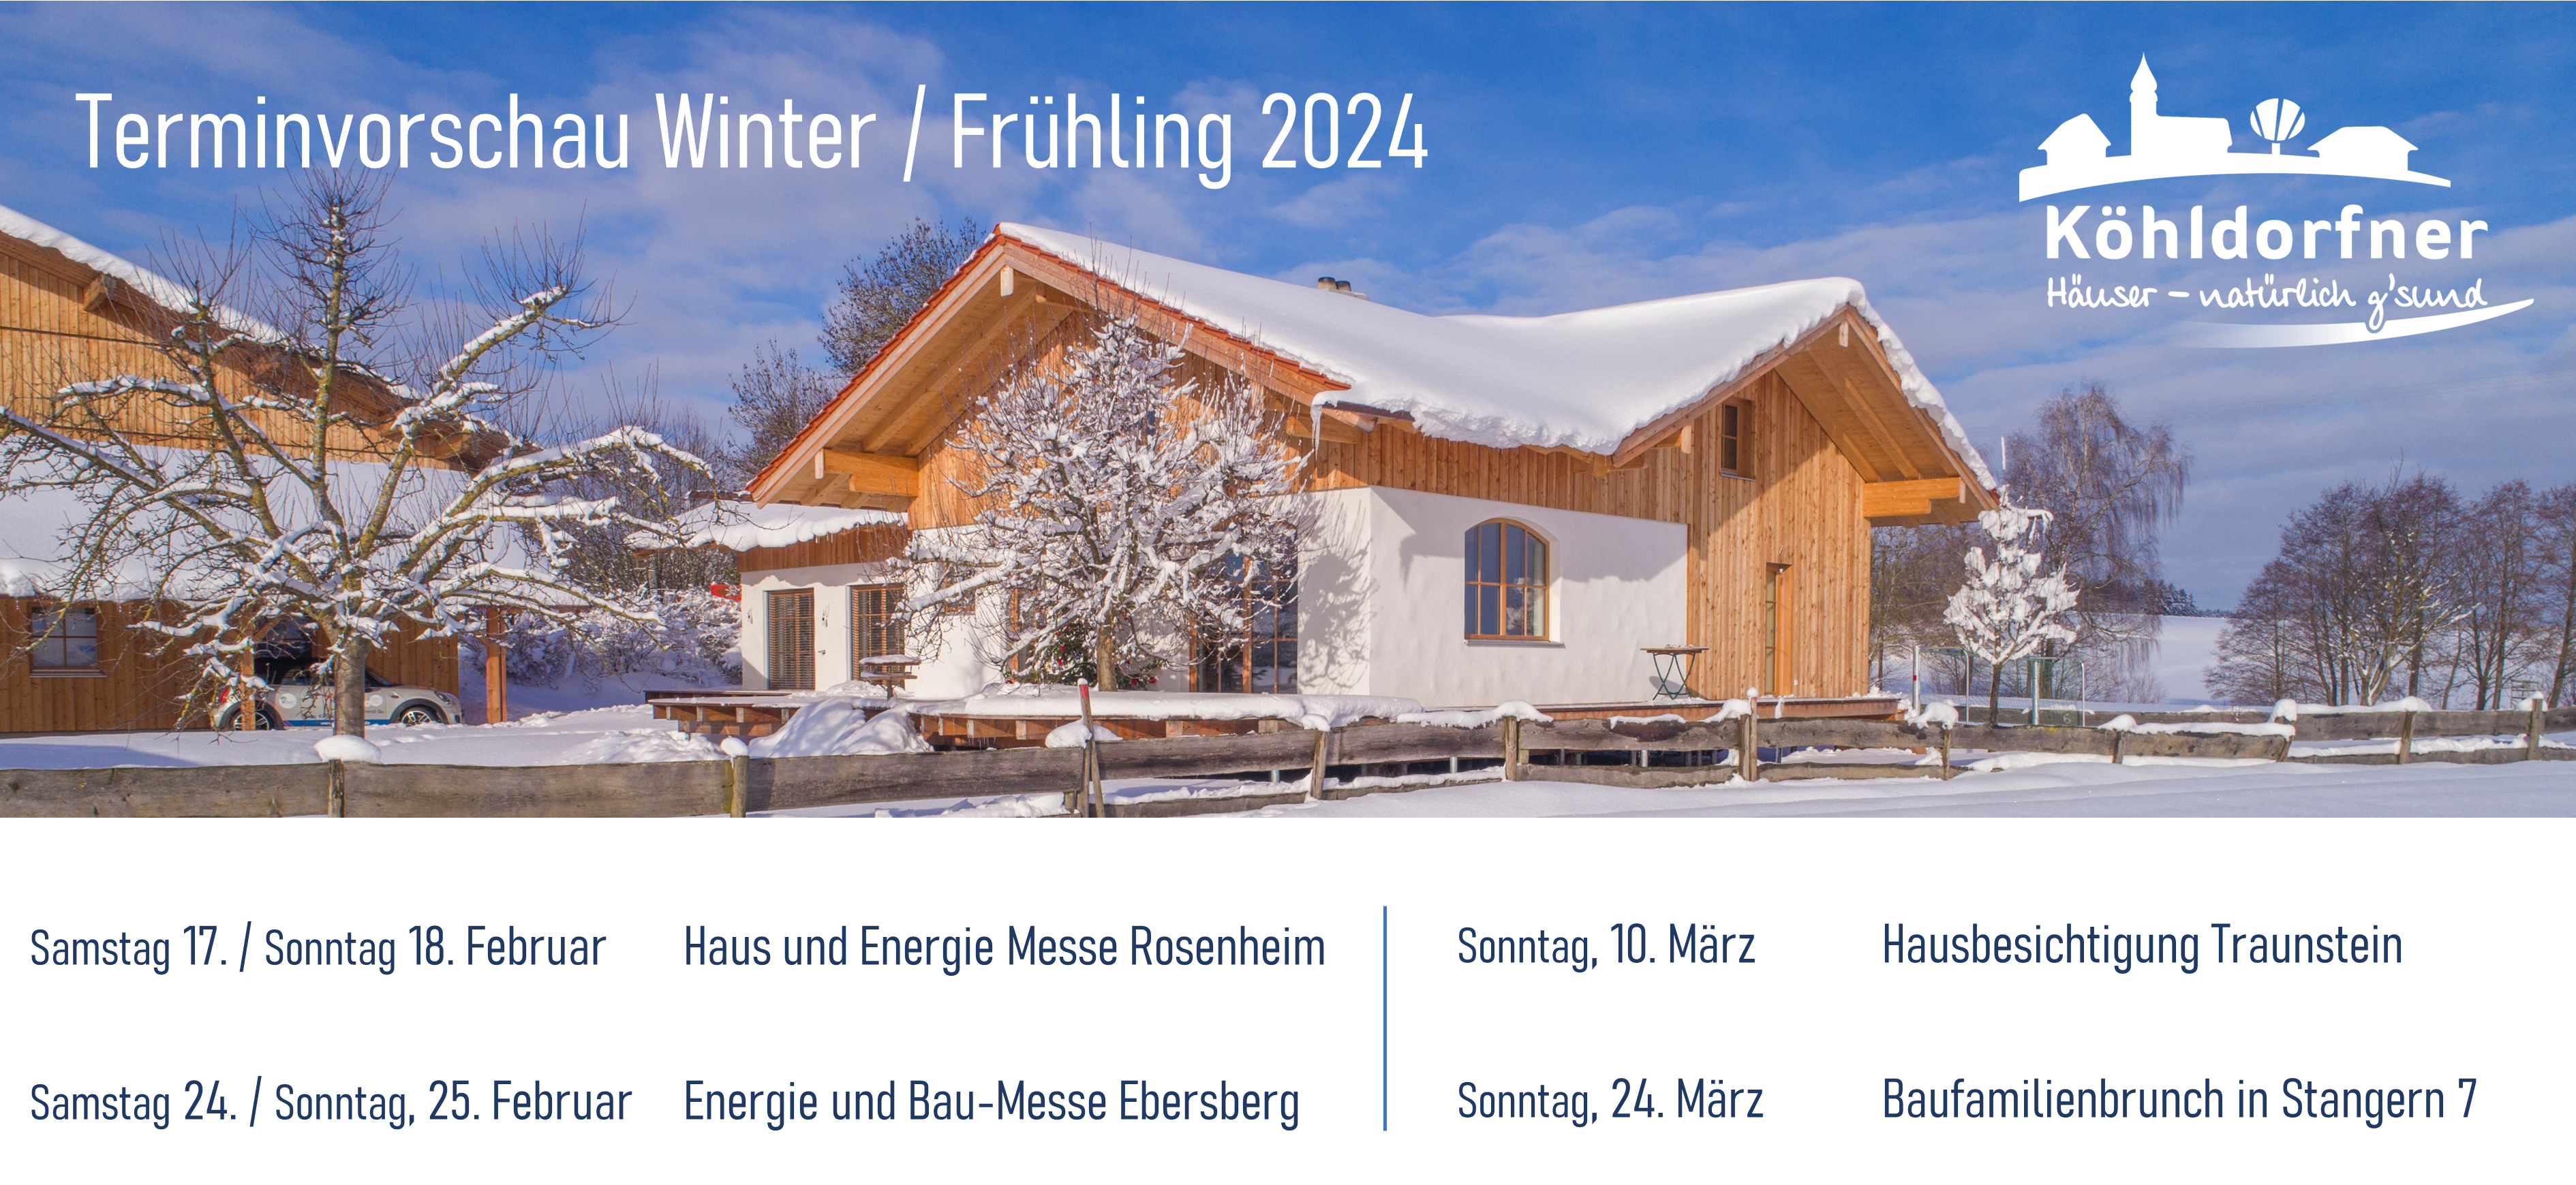 https://www.koehldorfner.de/wp-content/uploads/2024/01/Header_Terminvorschau-Winter-Frühling-2024.png